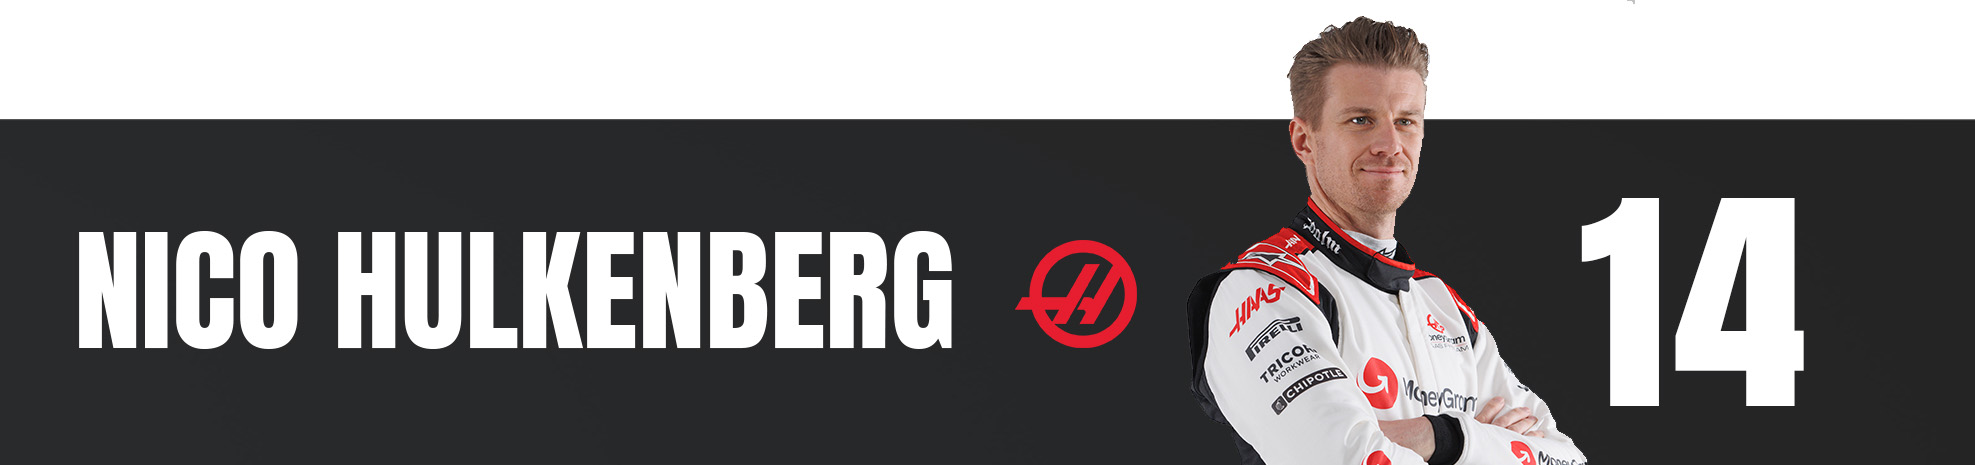 Miami GP F1 rankings Nico Hulkenberg